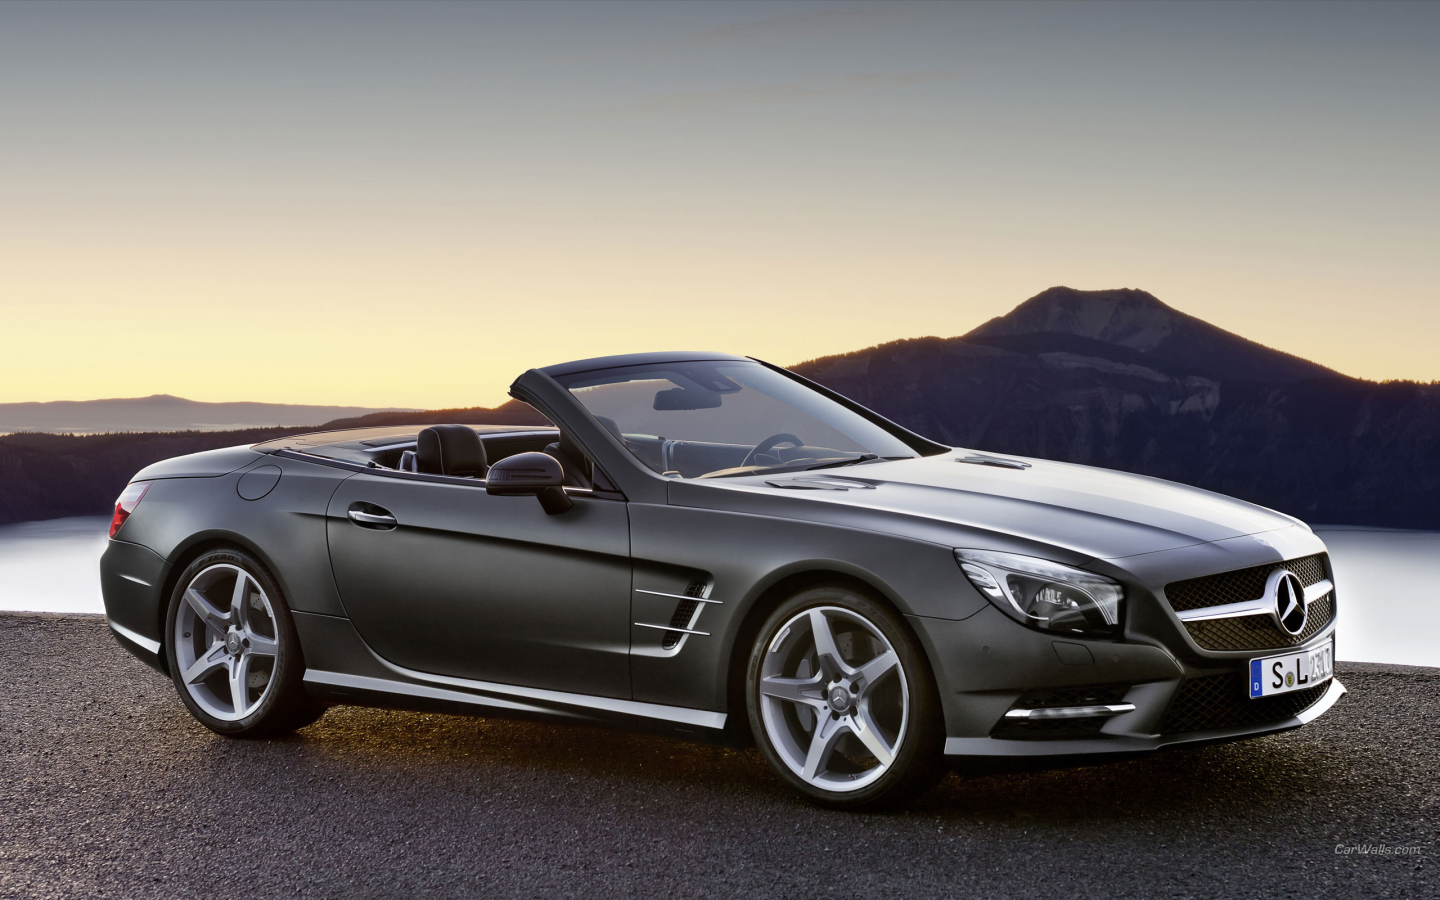 SL-Class, Mercedes-Benz, машины, автомобили, авто